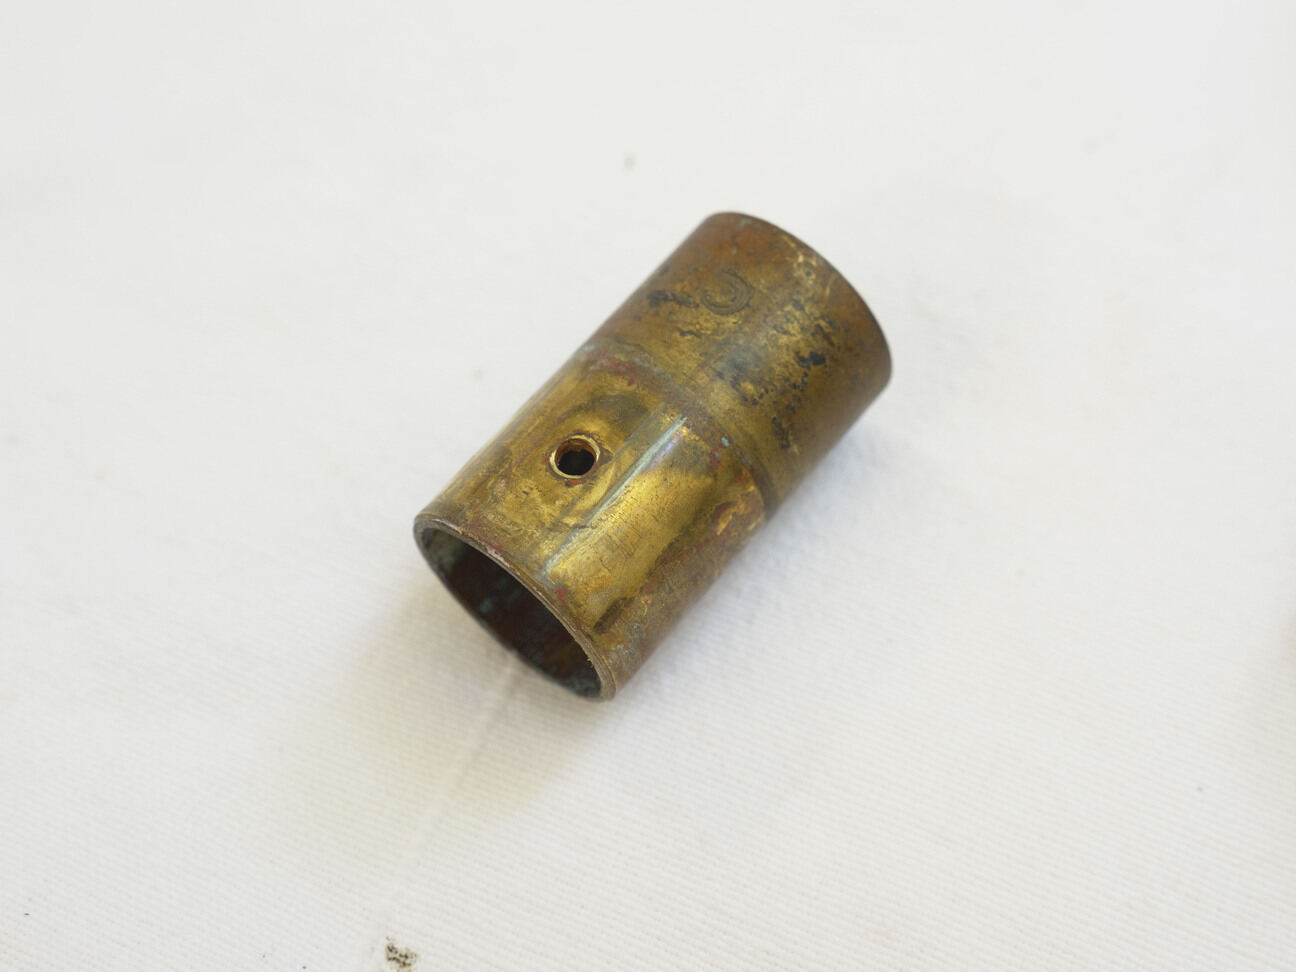 Used shape brass VM68 feed nipple with set screw hole